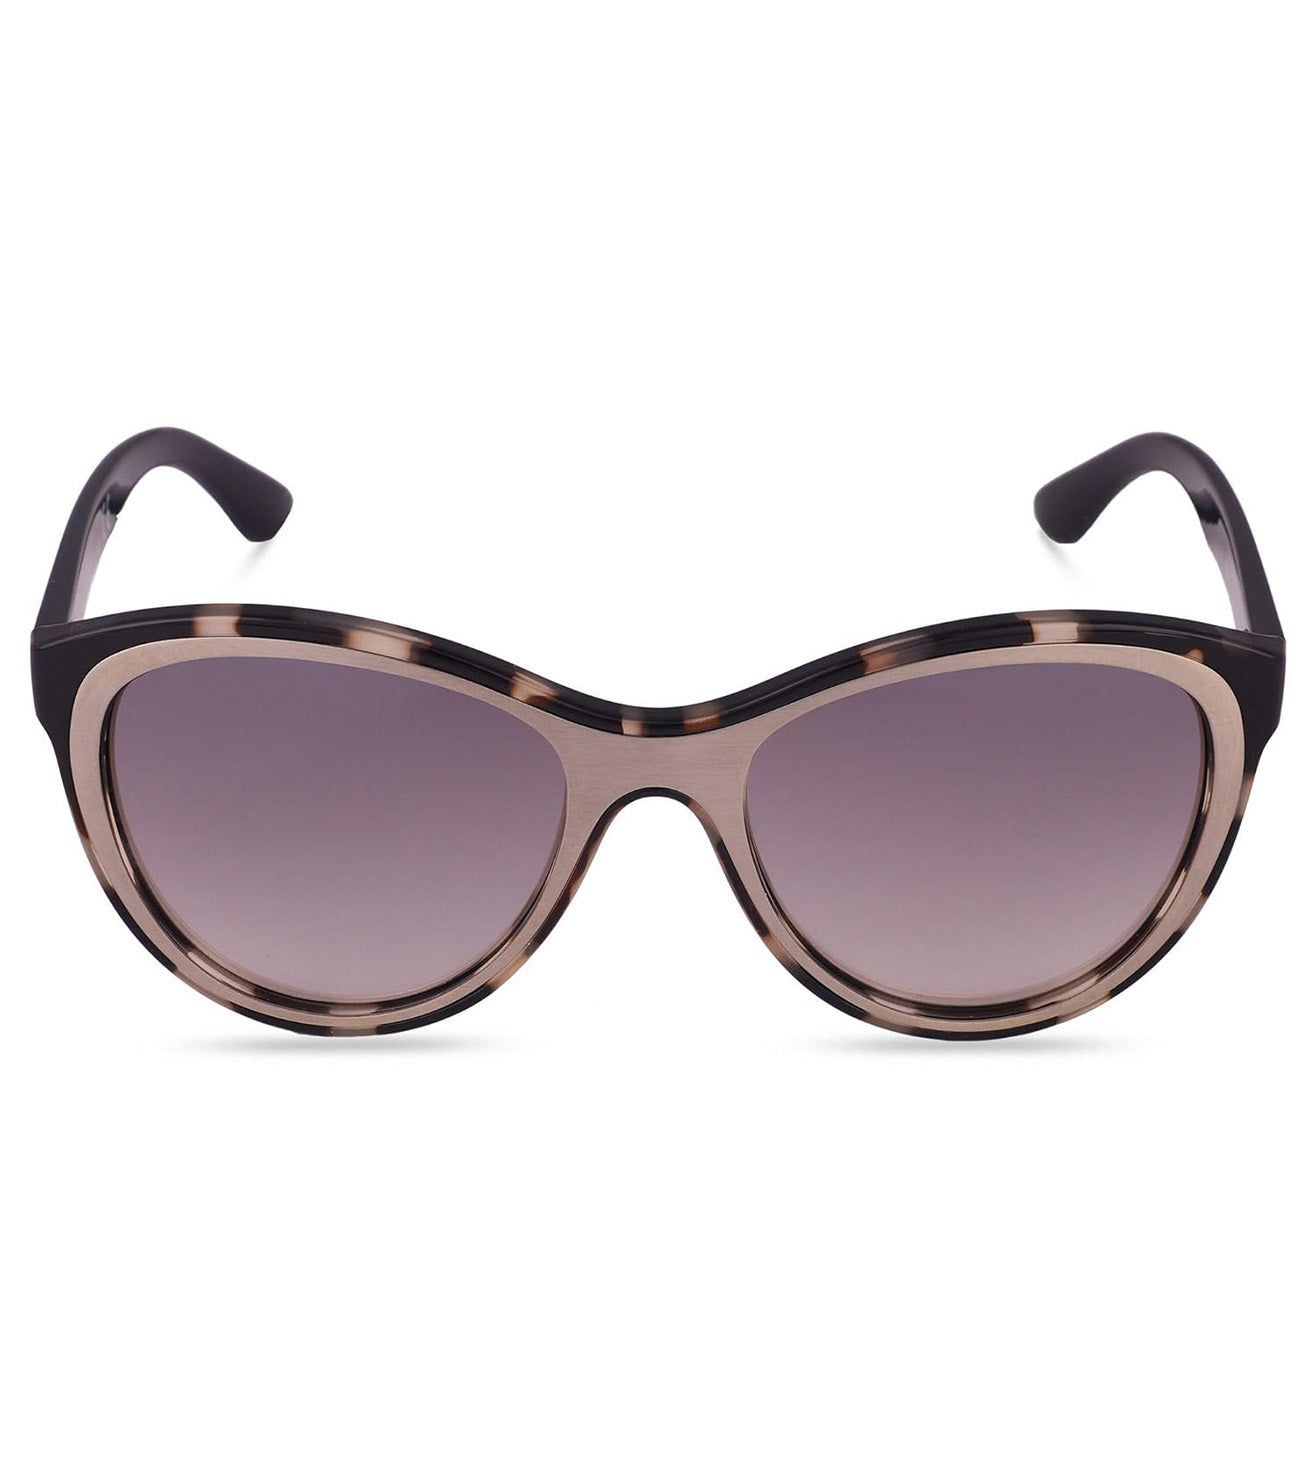 Scott Women's Grey Oval Sunglasses